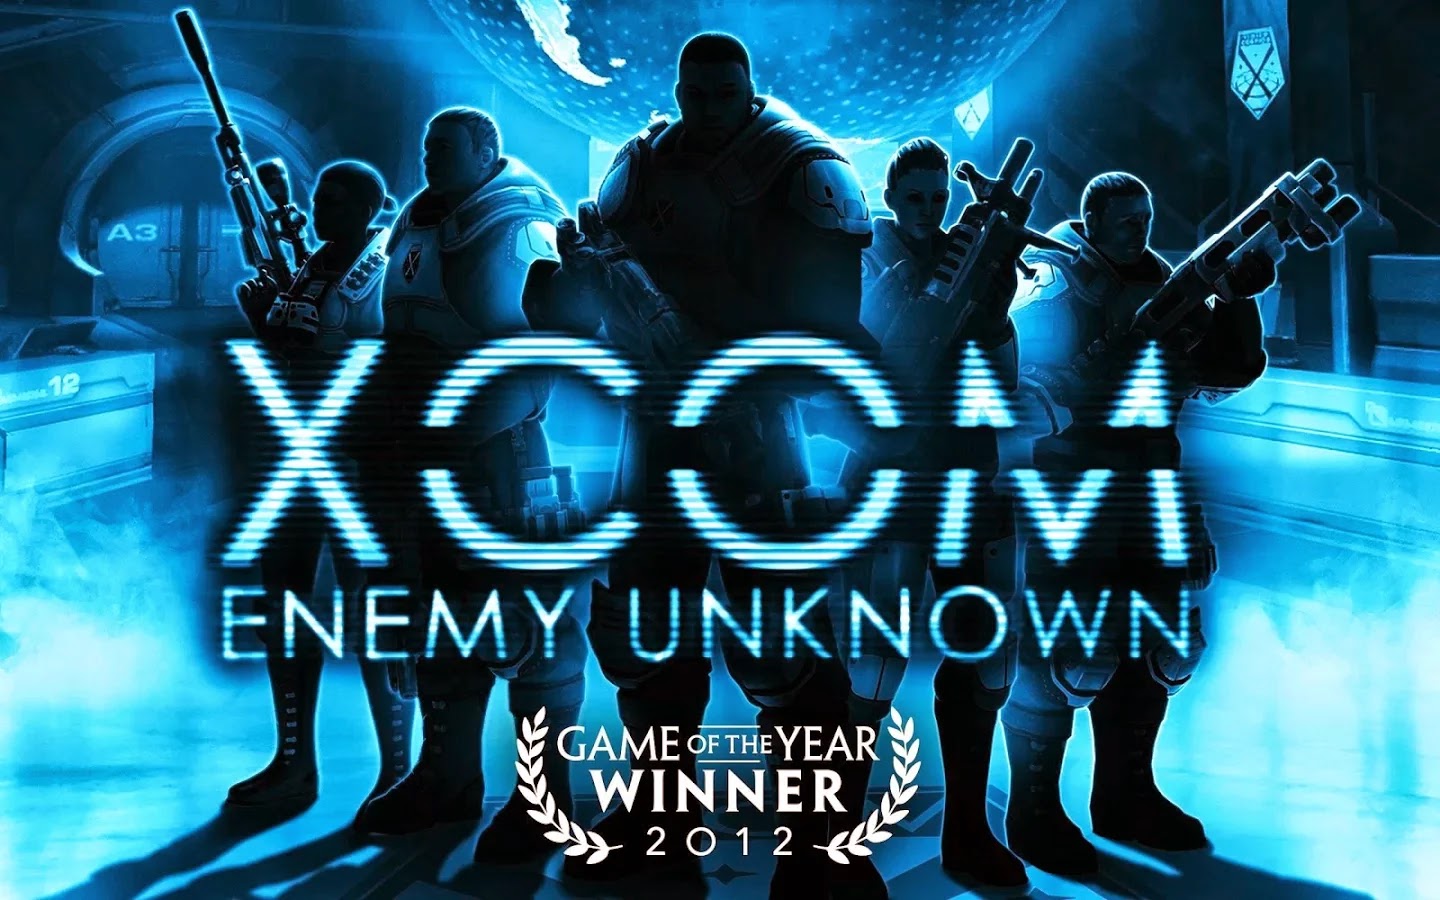 XCOM®: Enemy Unknown Android Oyunu